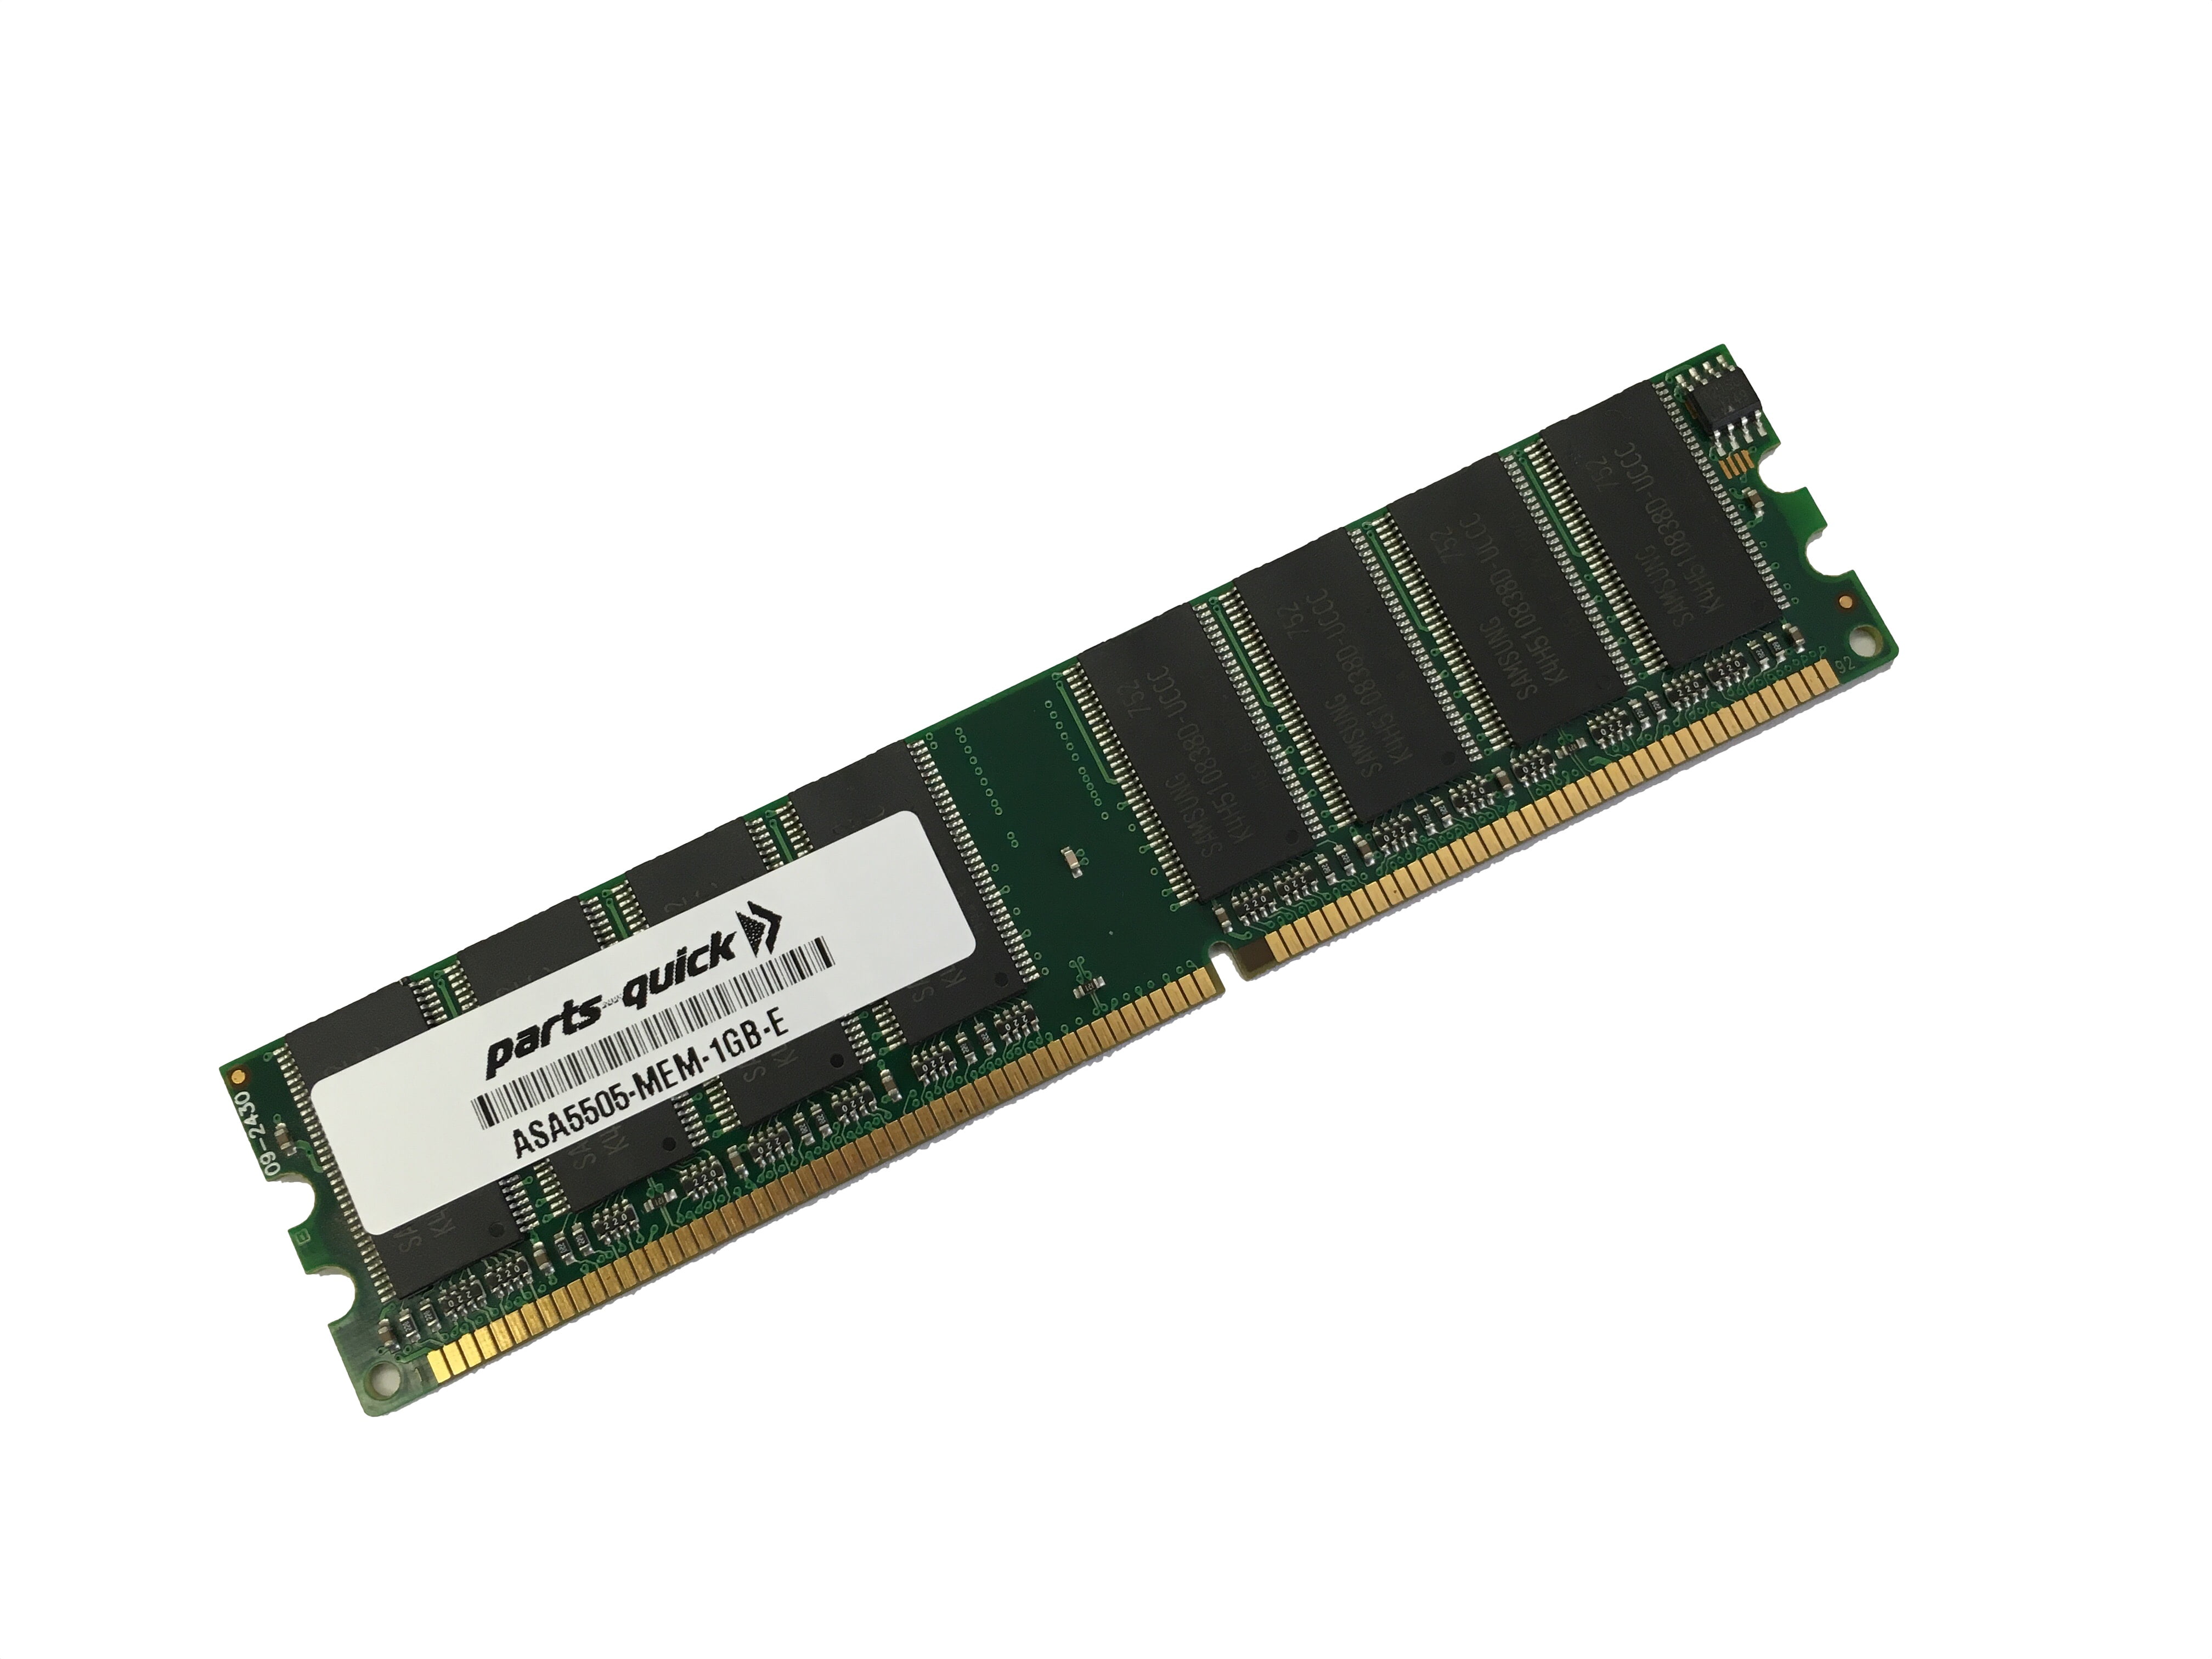 MEM-LC-ISE-1G 1GB  Memory for Cisco 12000 series 